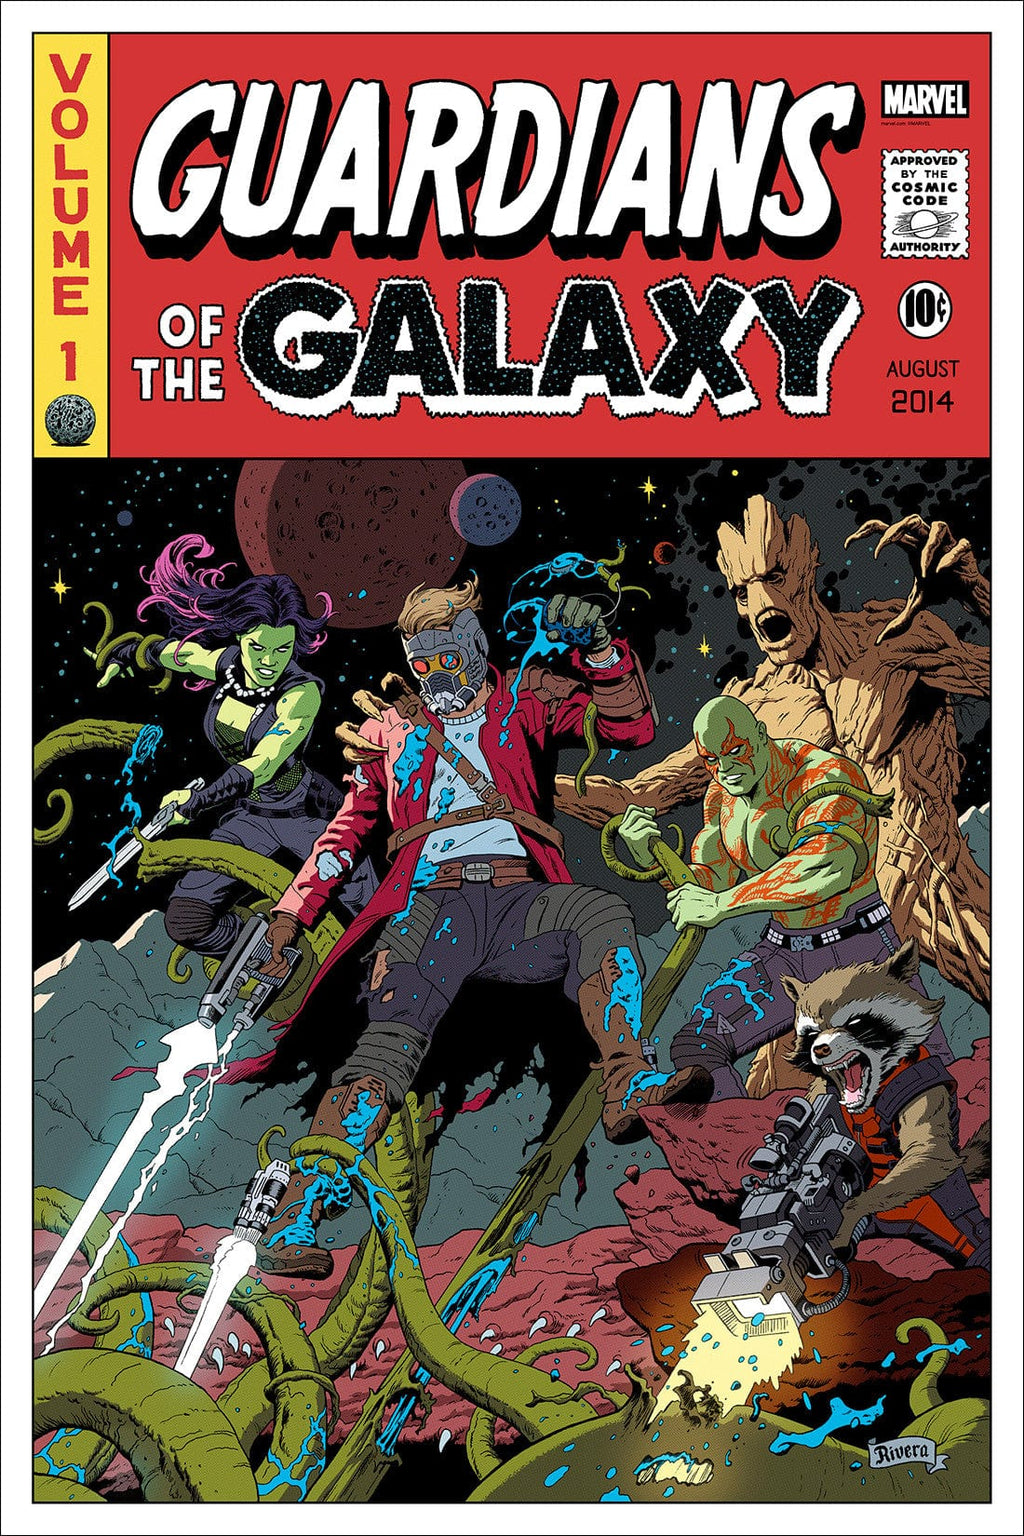 Guardians of the Galaxy – Mondo